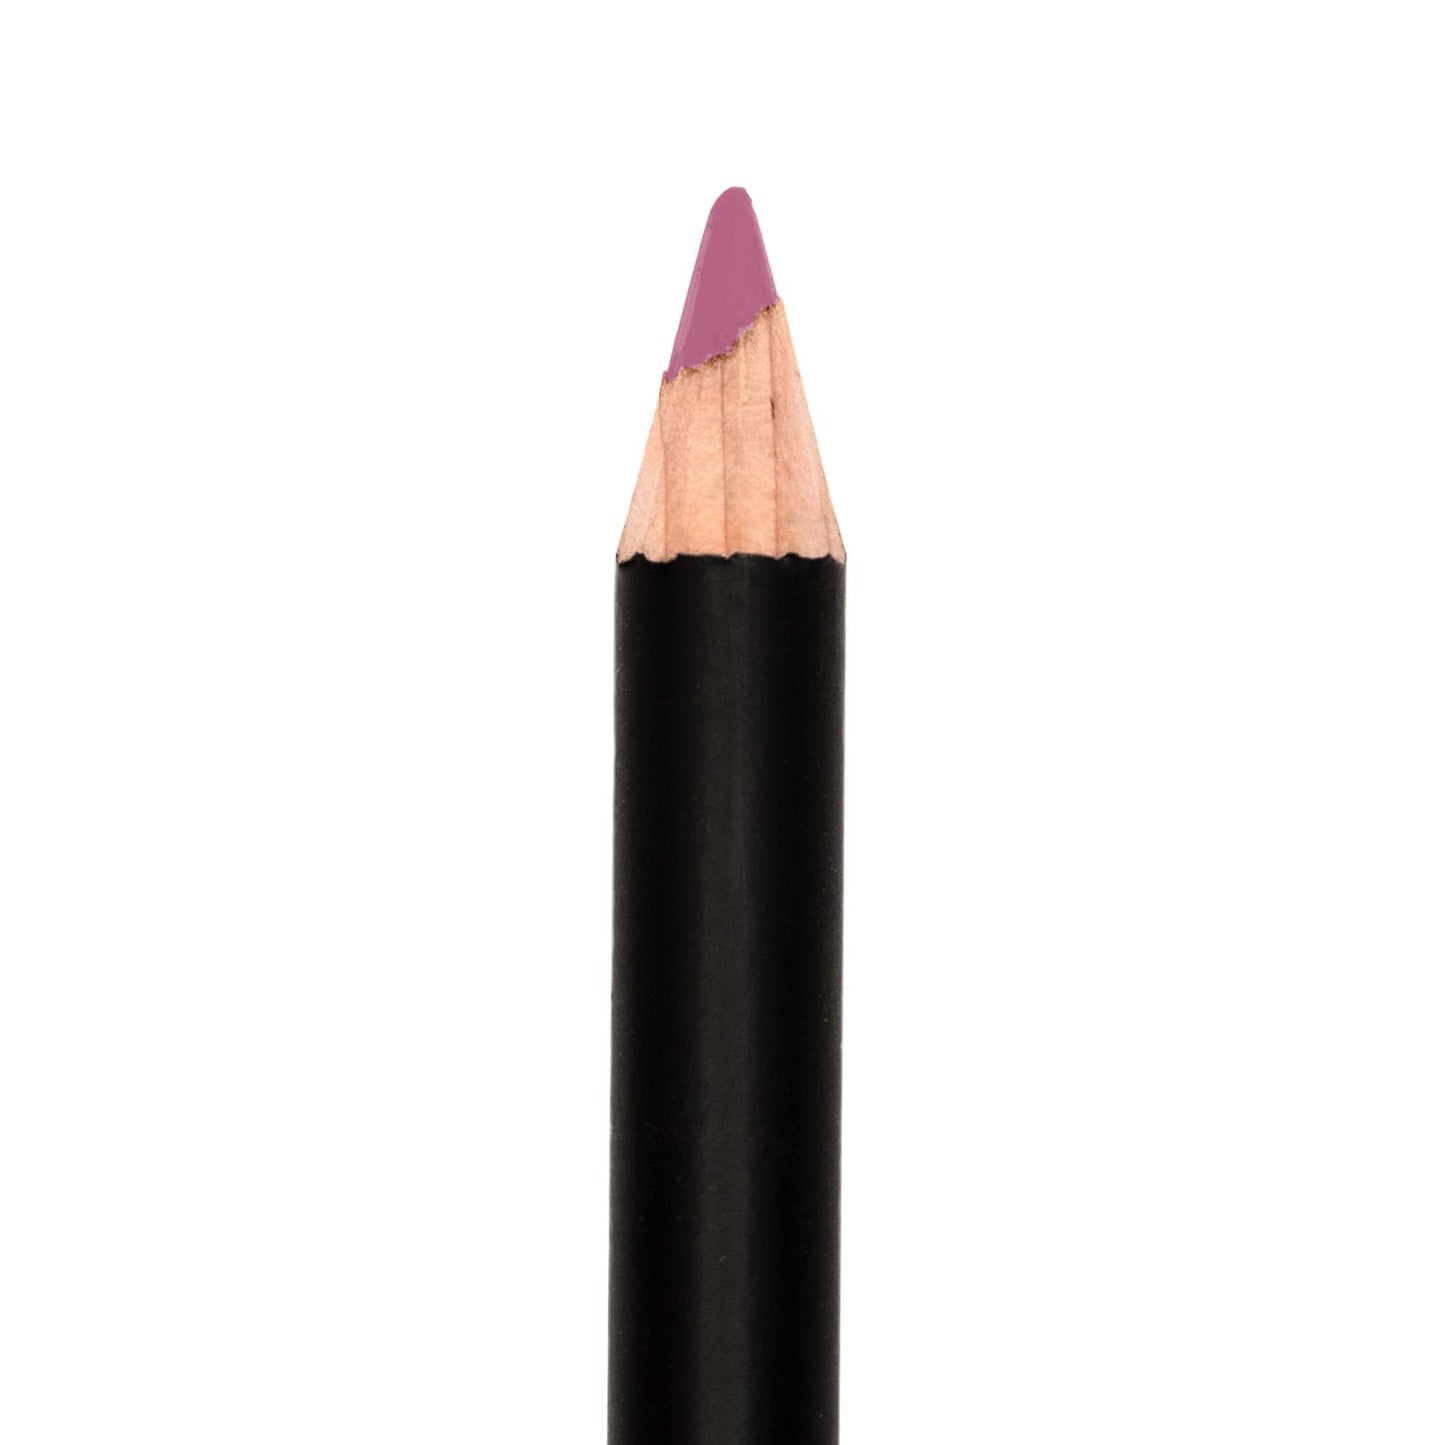 Lip Pencil - Charm - theshithotcompany